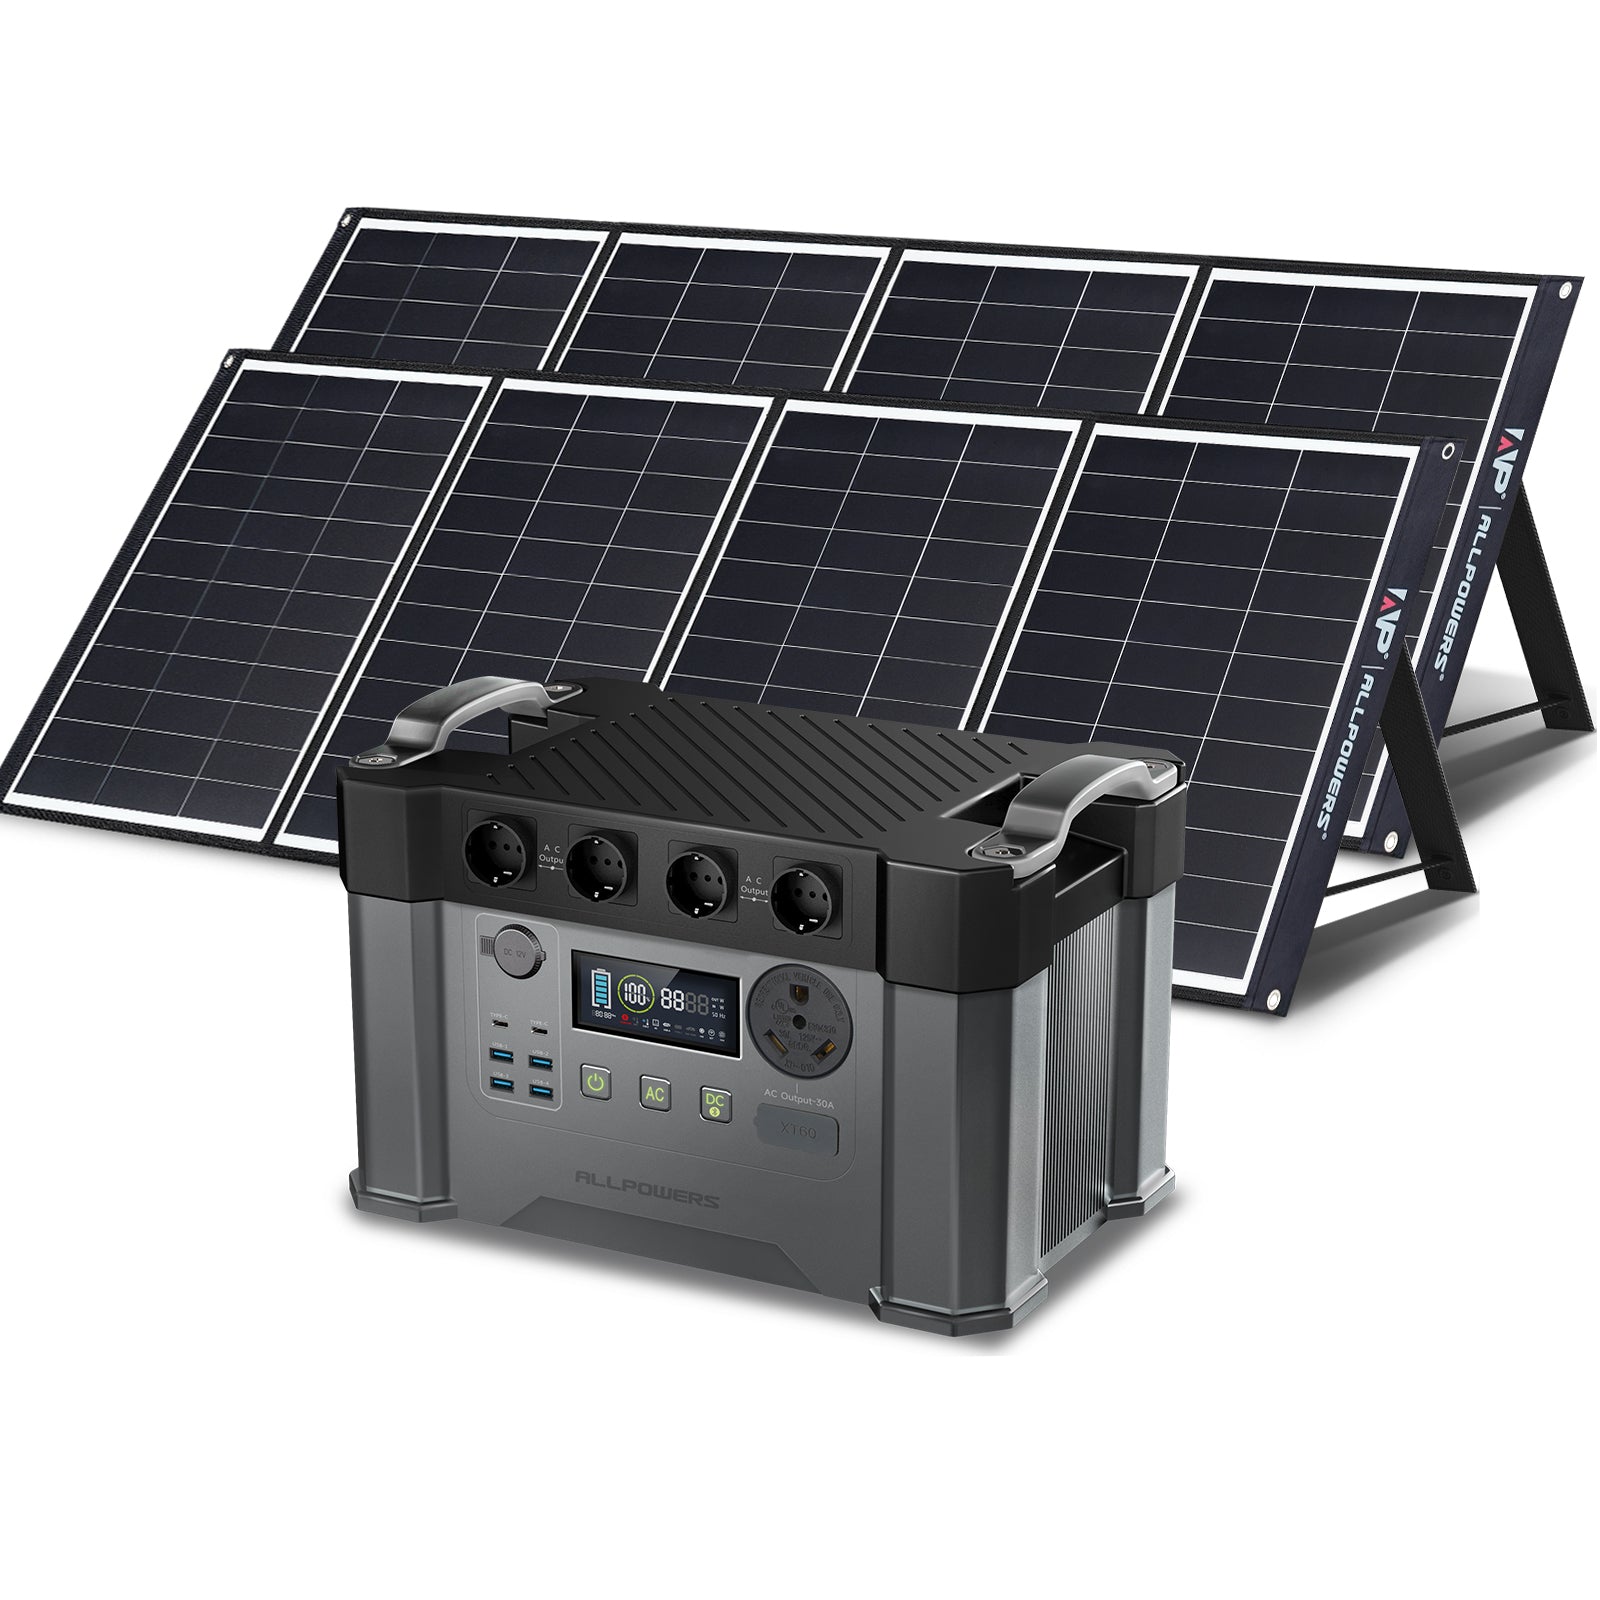 ALLPOWERS Solar Generator Kit 2400W (S2000 Pro + SP035 Solar Panel with Monocrystalline Cell) 